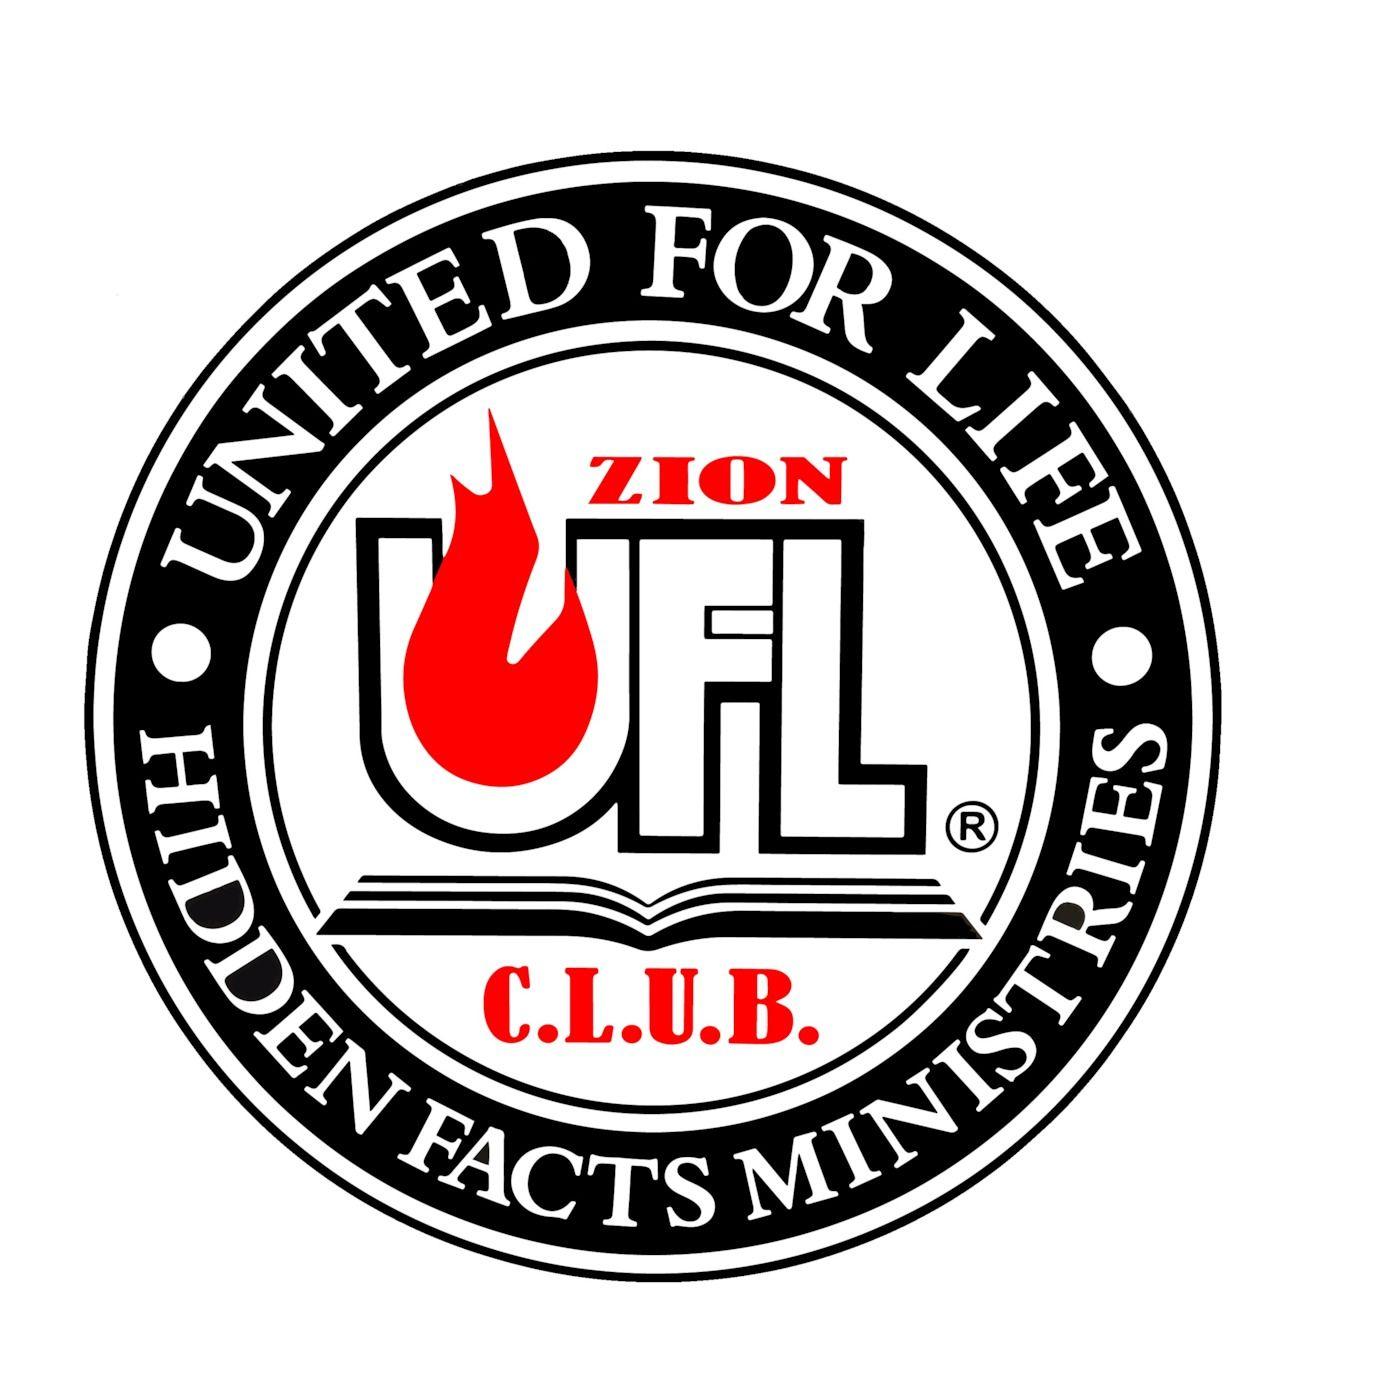 UFL Logo - pod. fanatic. Podcast: Mt Zion UFL